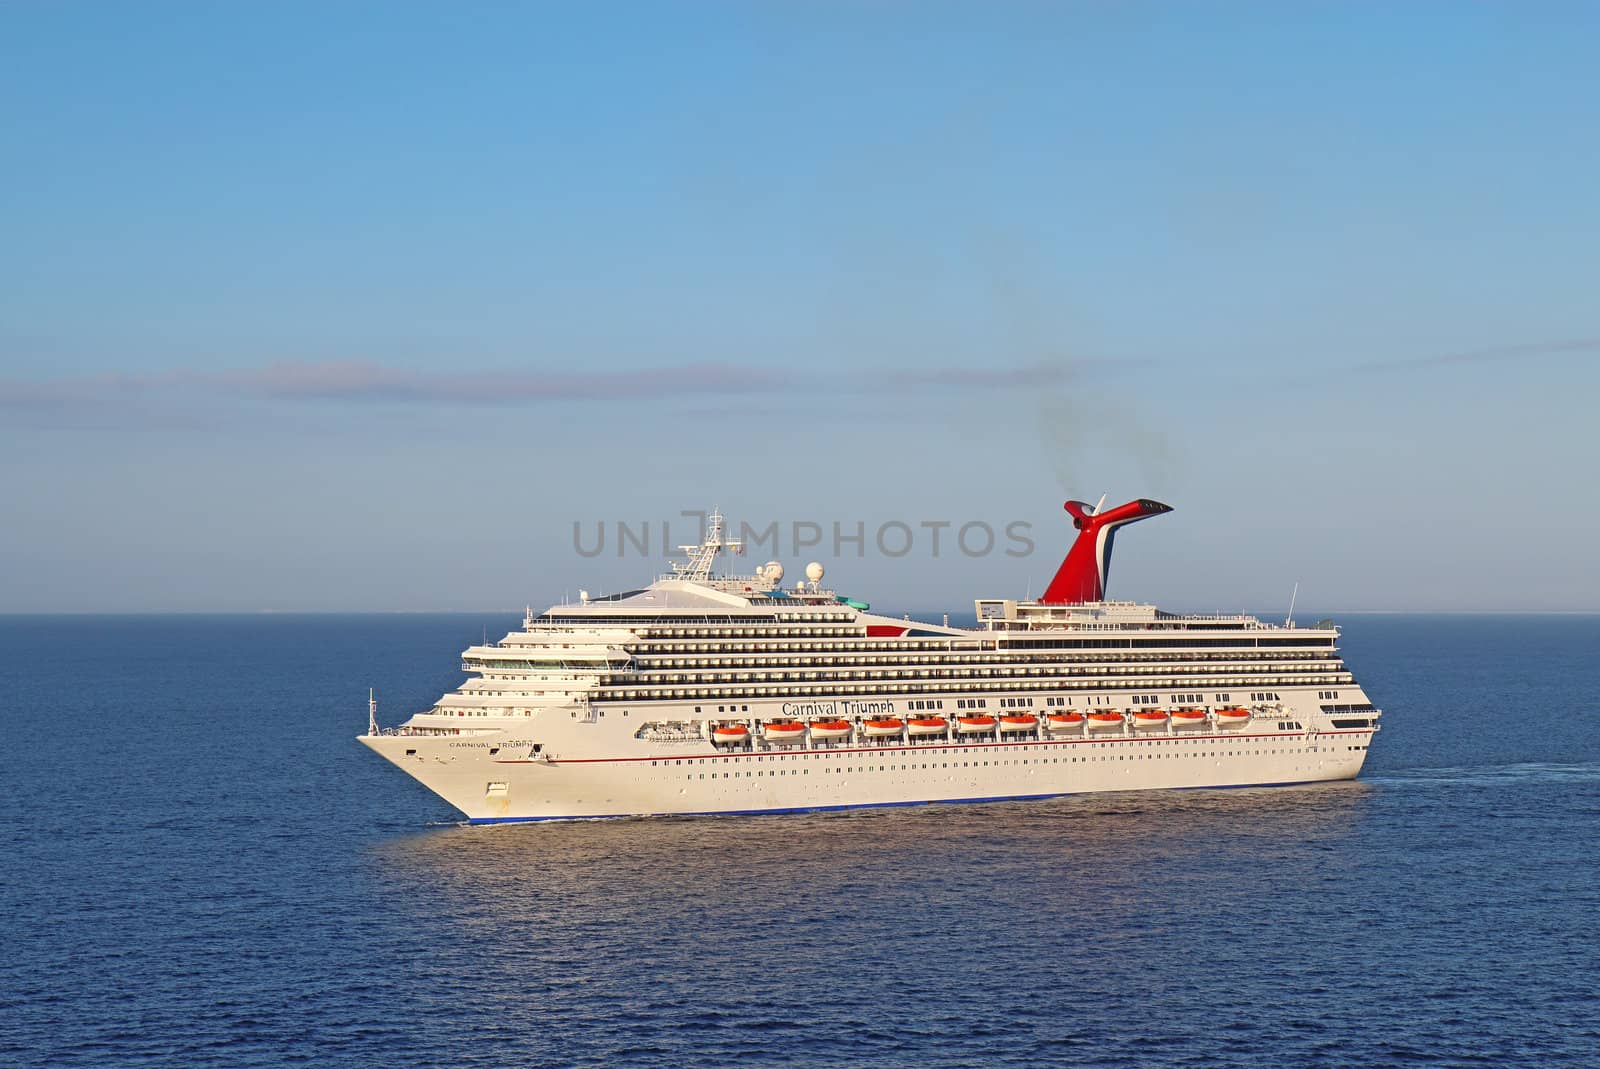 Cruise ship Carnival Triumph on the Caribbean Sea by sgoodwin4813